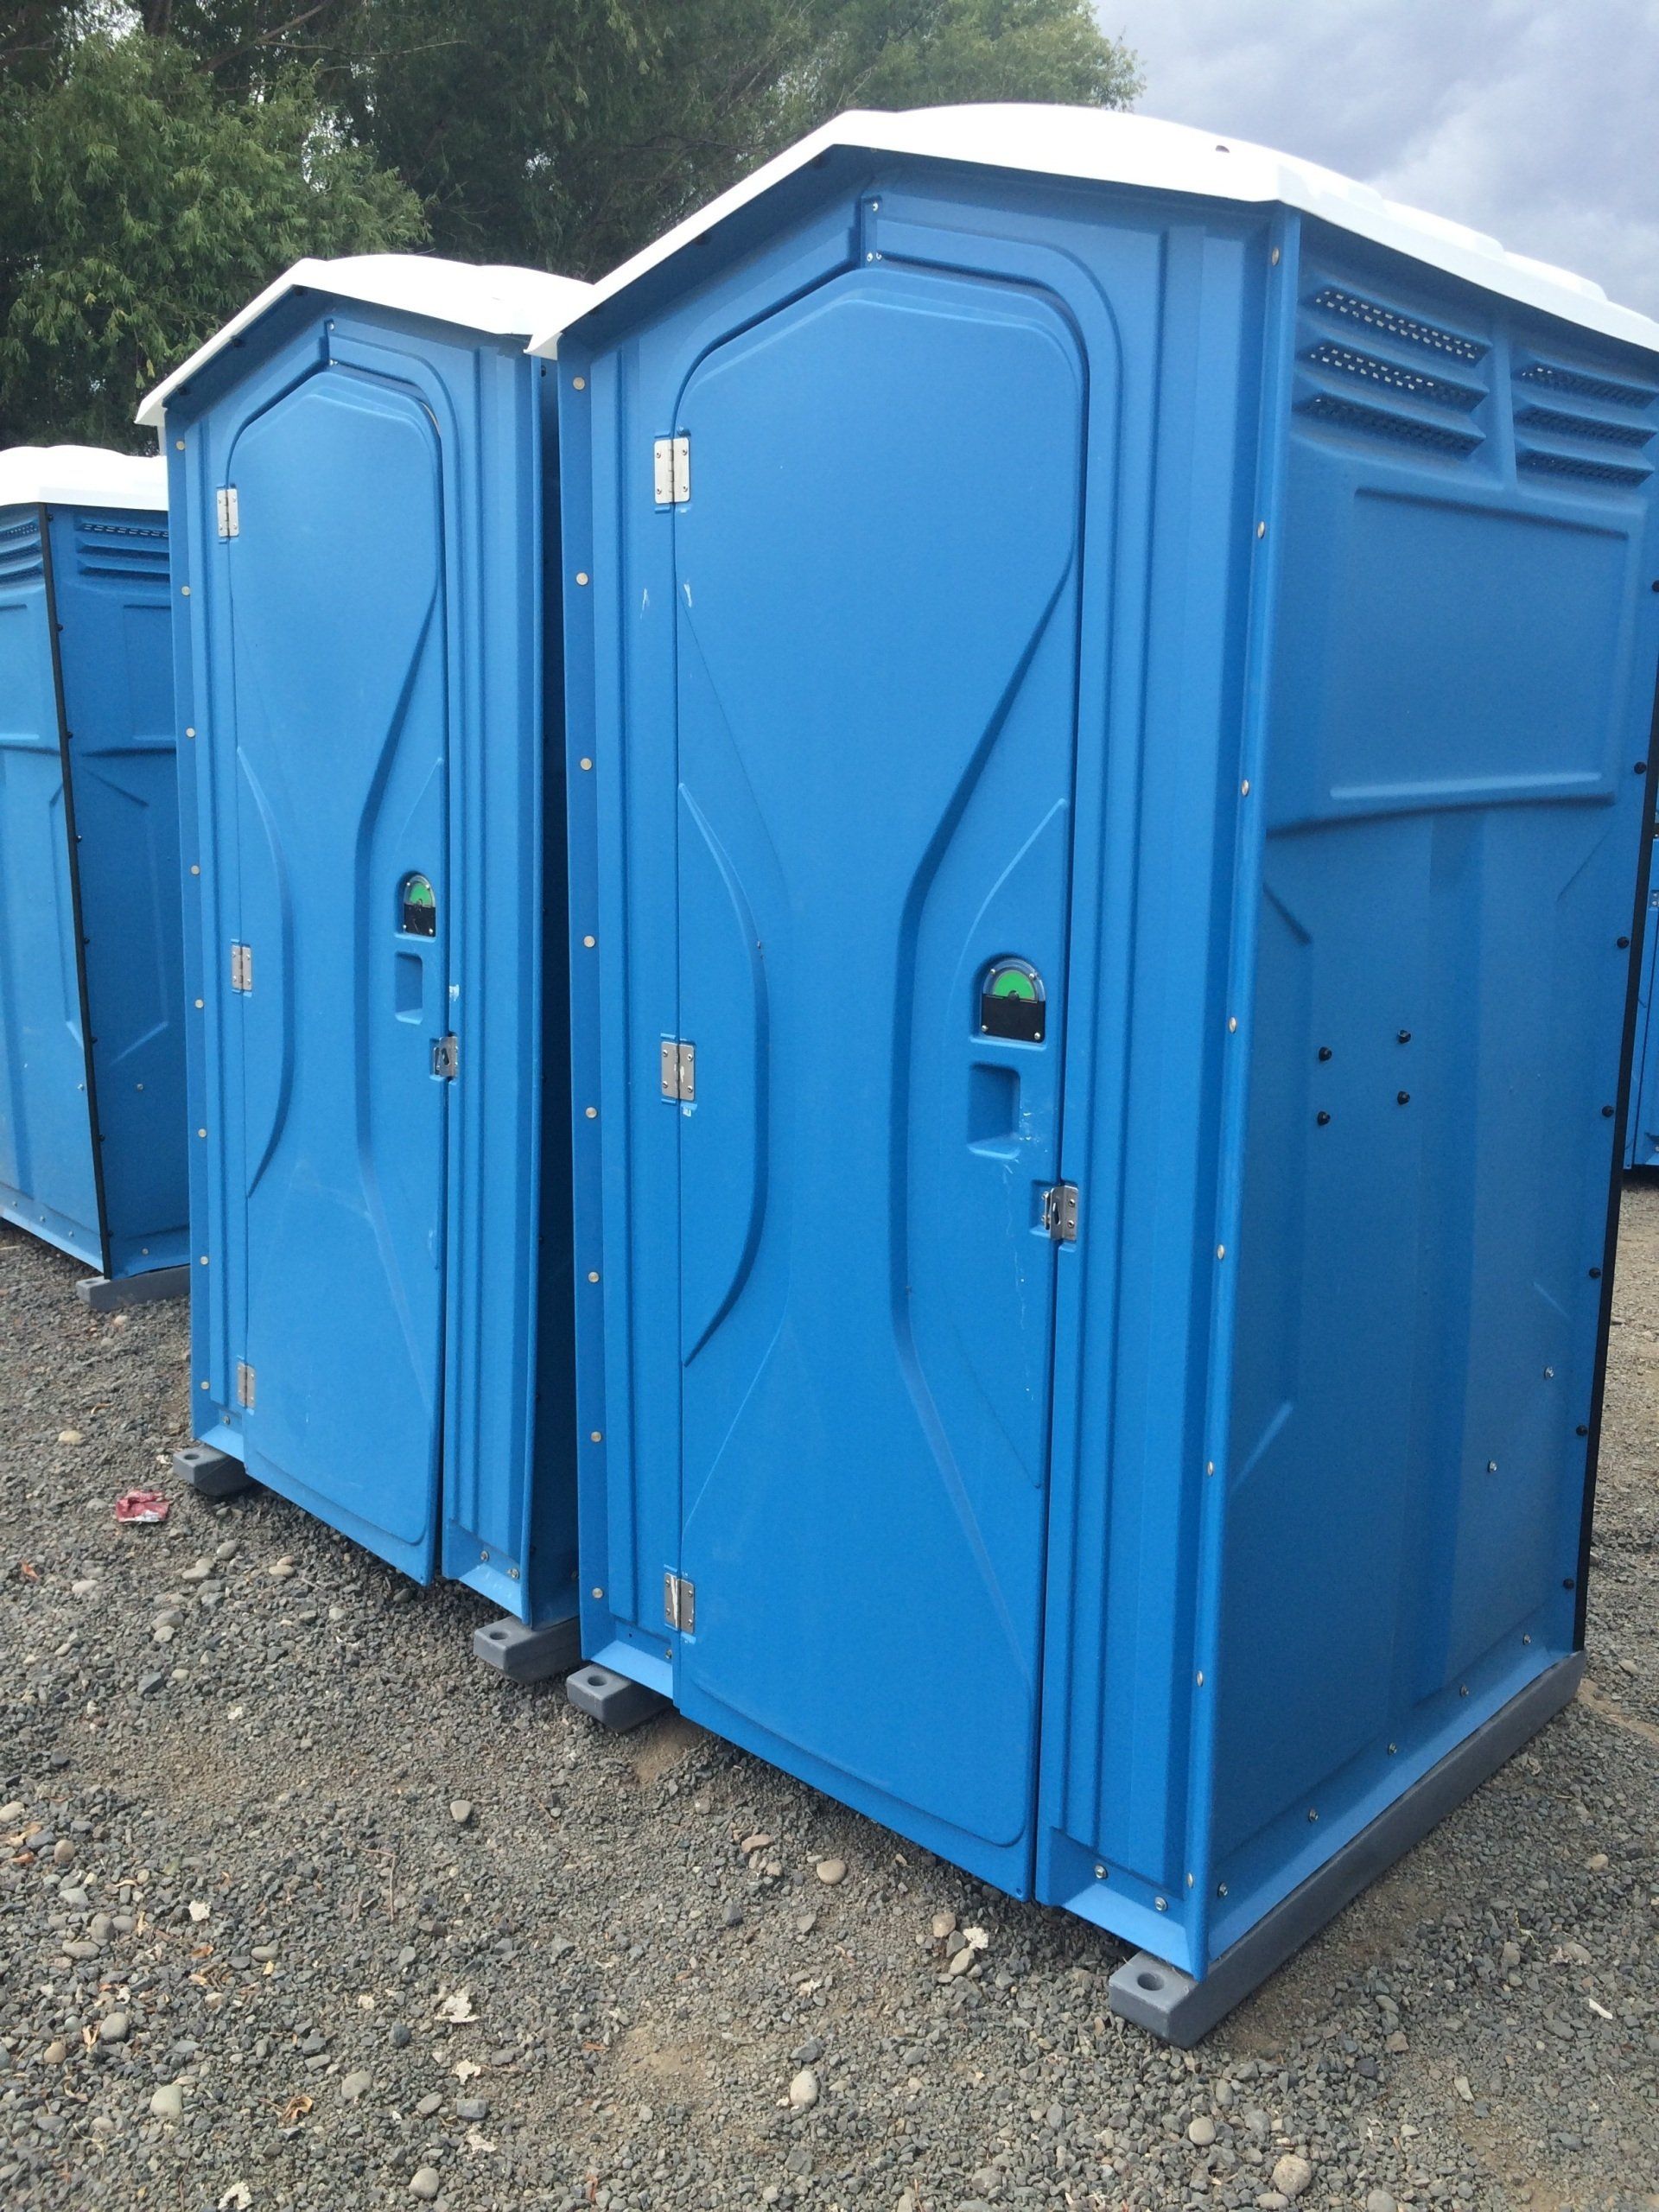 Portable toilet rentals — Union Gap, WA — Cliff’s Septic Tank Service